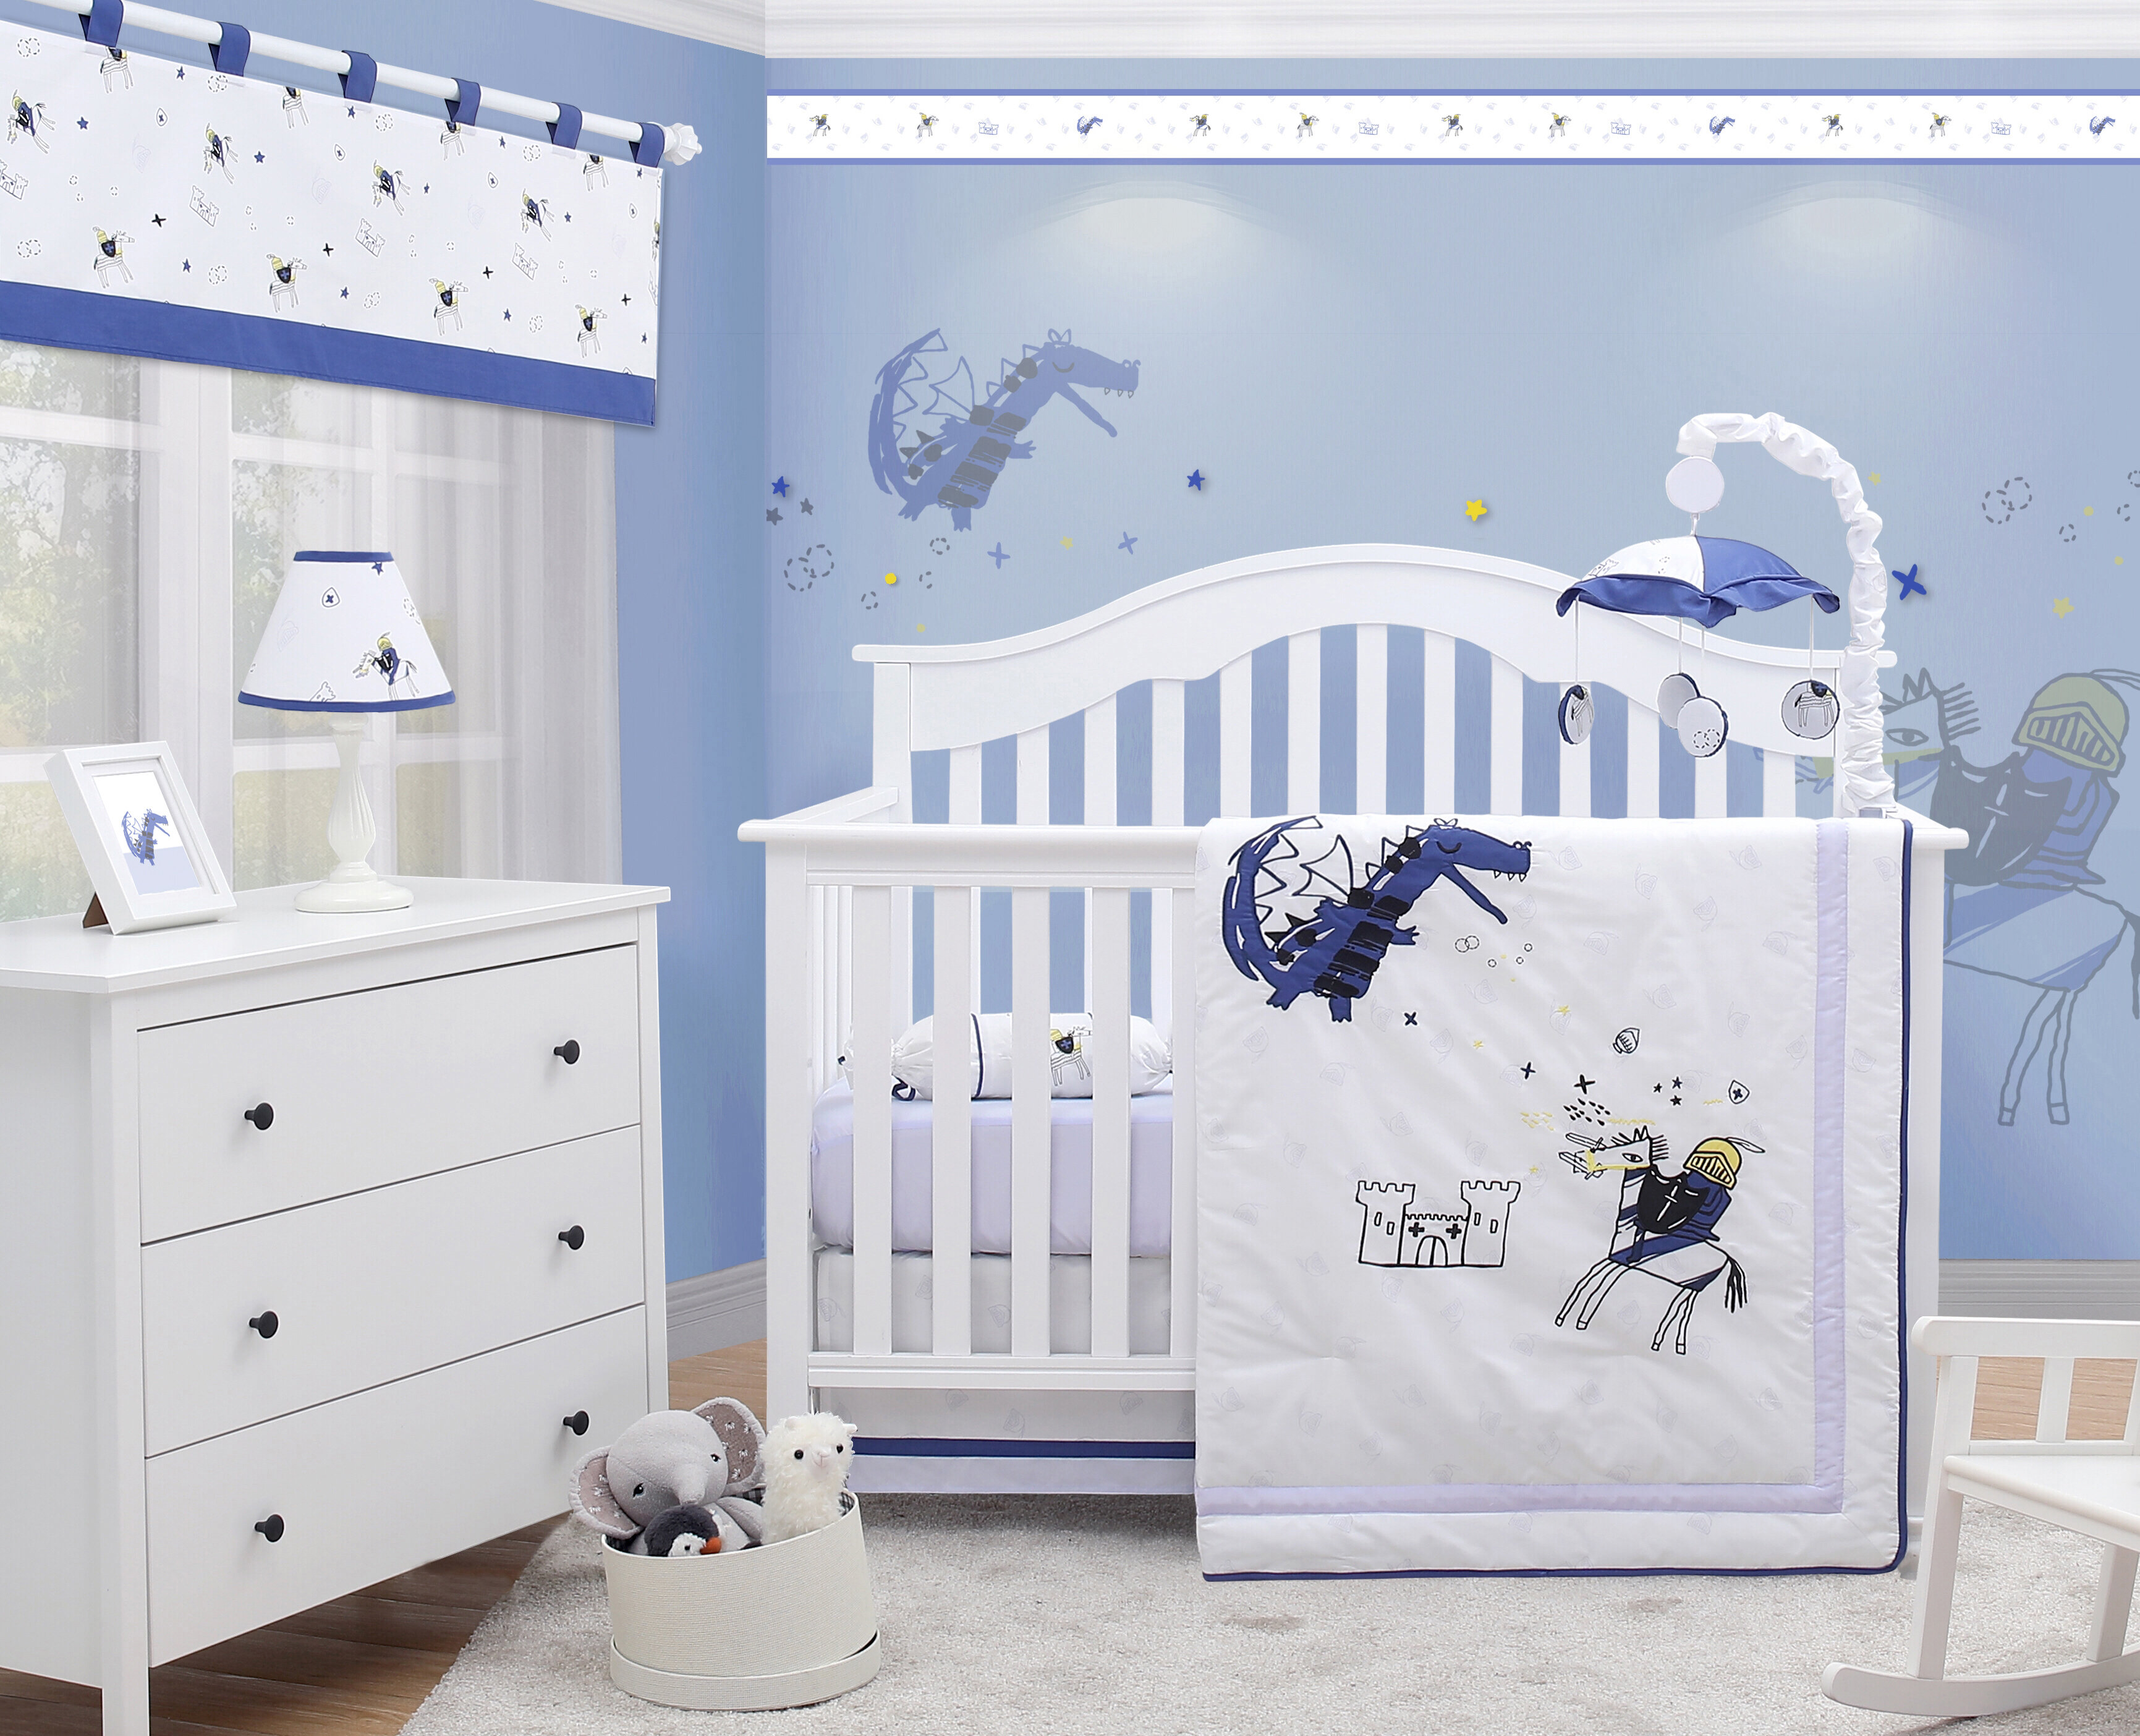 Baby Bedding Crib Bedding For Boys Free Shipping Over 35 Wayfair